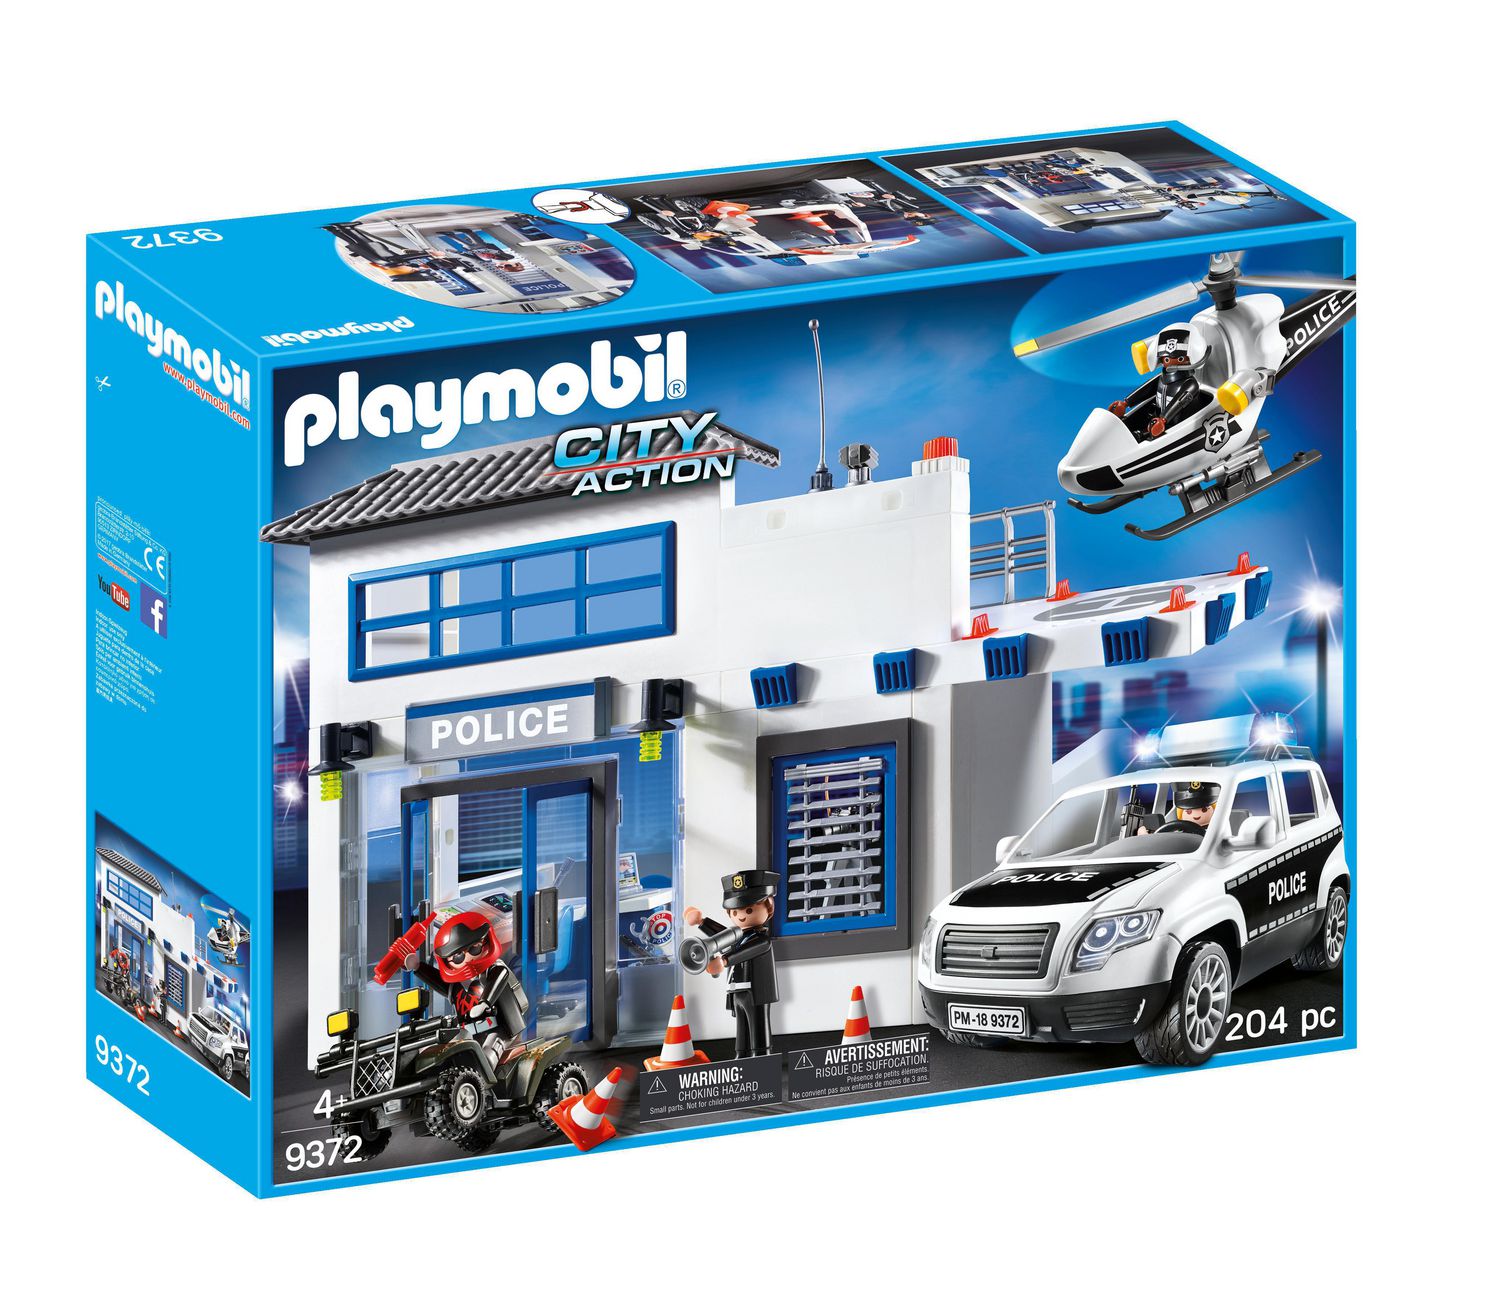 Police Money Imaginative Set By Playmobil (9371) |